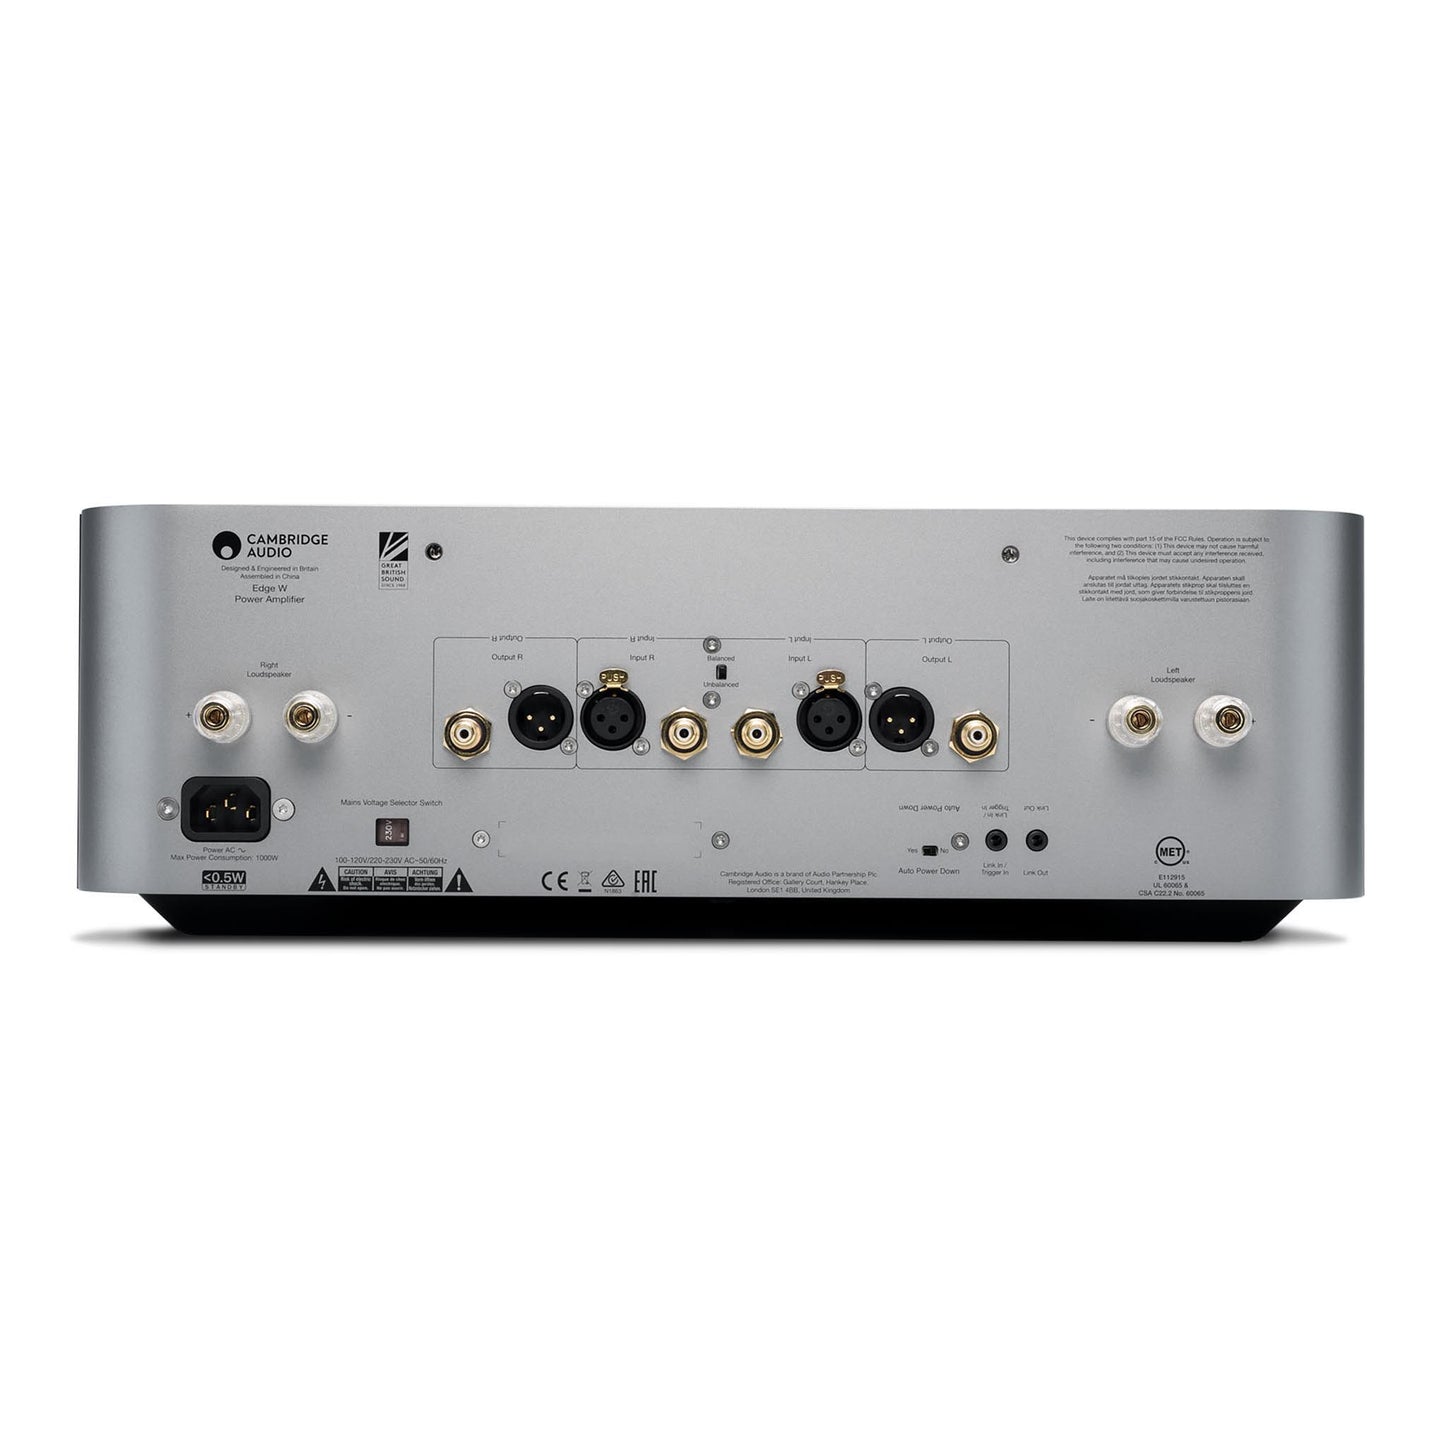 Cambridge Audio Edge W Stereo Power Amplifier